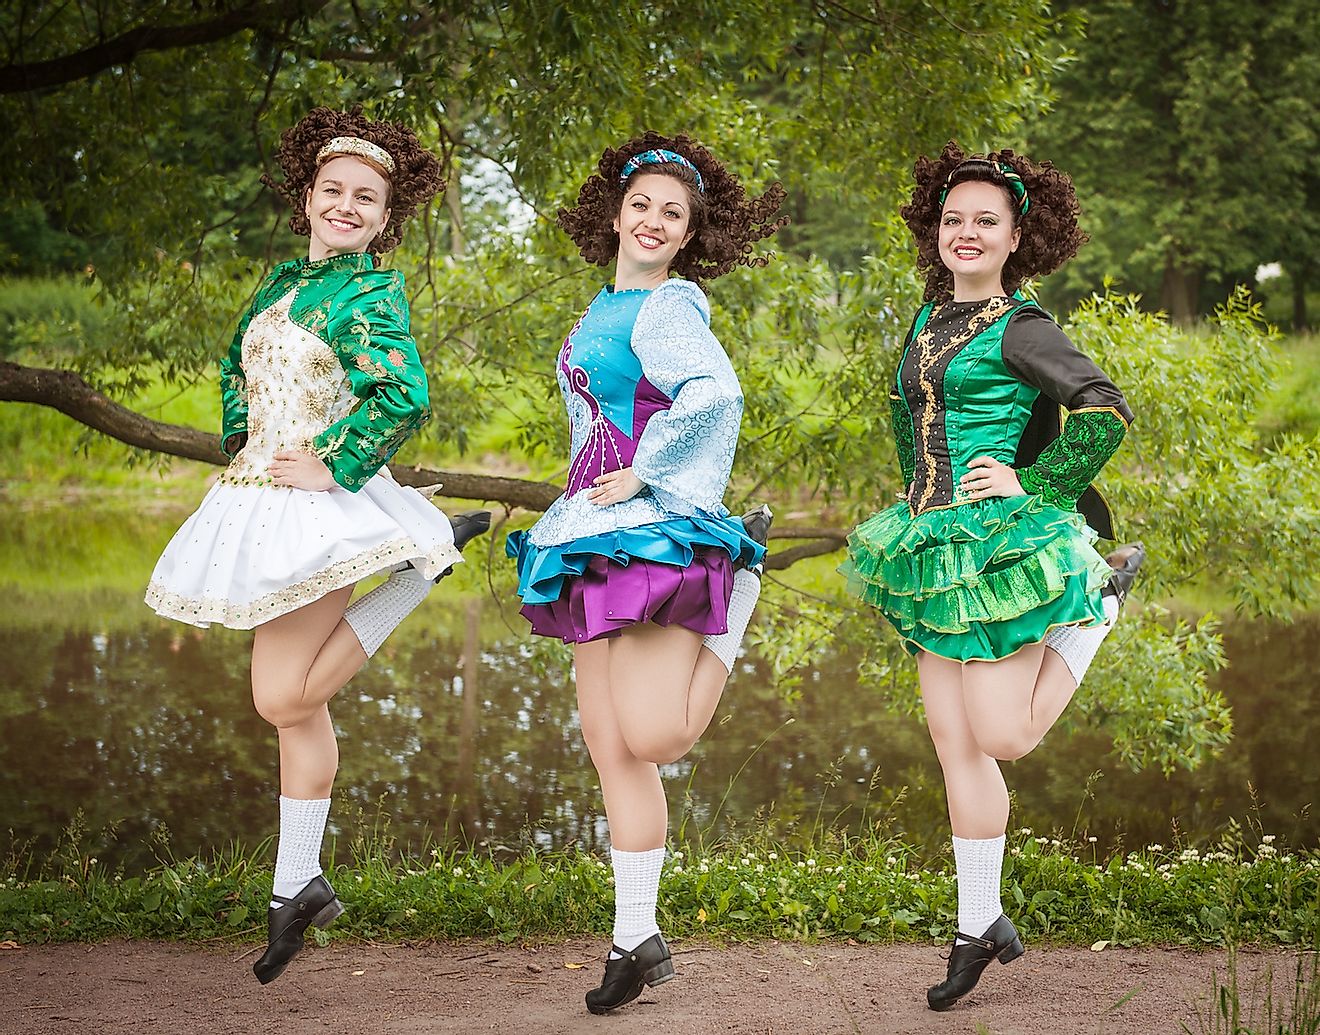 Irish dancers in their traditional dancing costumes. Image credit: DarkBird/Shutterstock.com